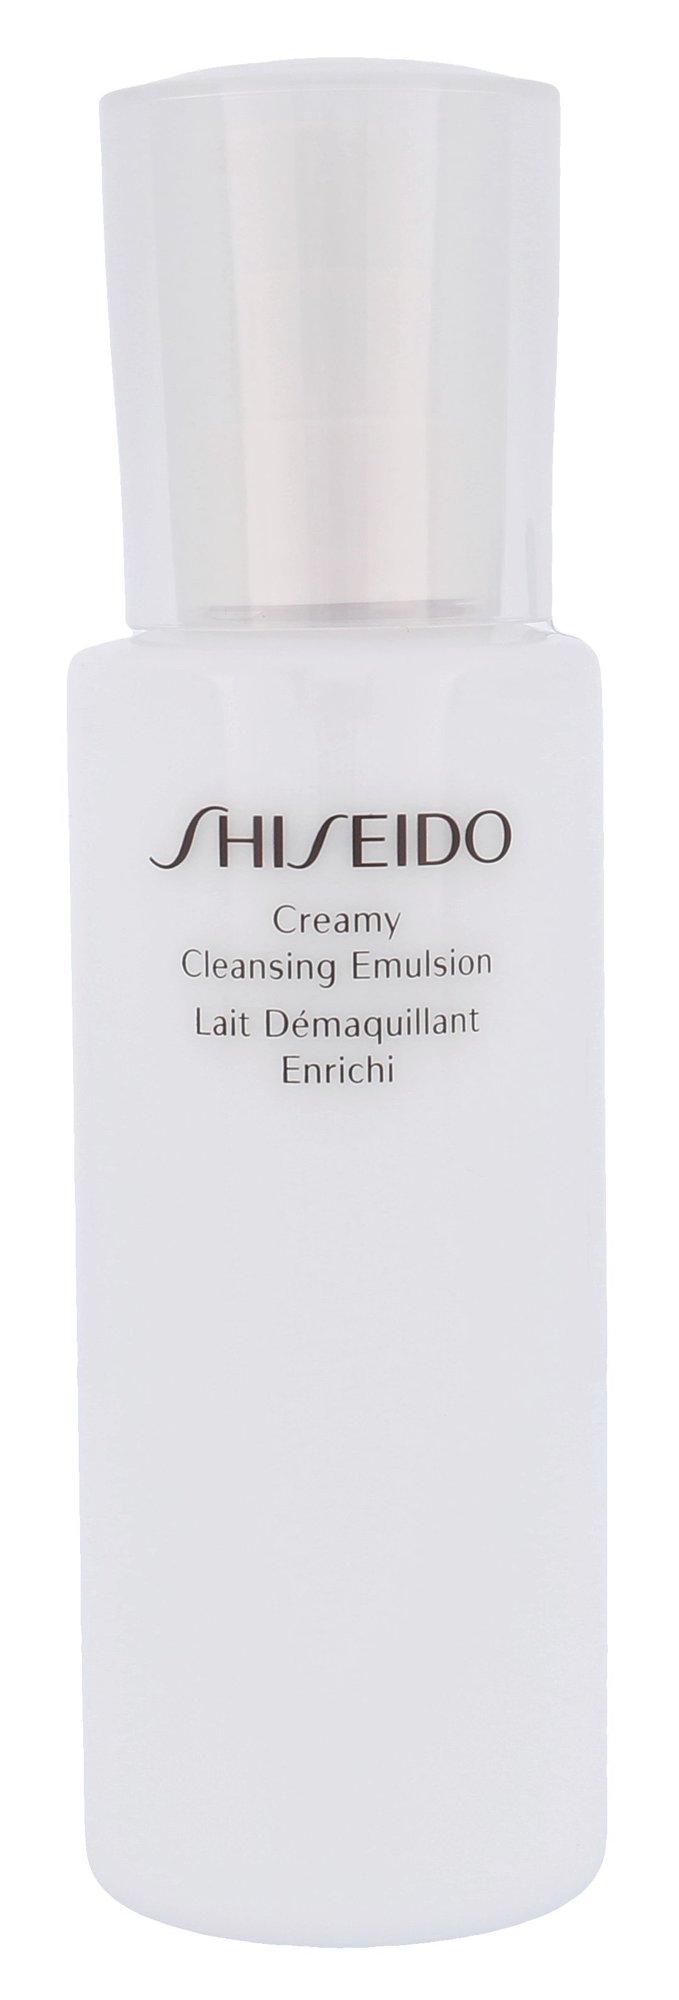 Shiseido Creamy Cleansing Emulsion 200ml veido emulsija Testeris